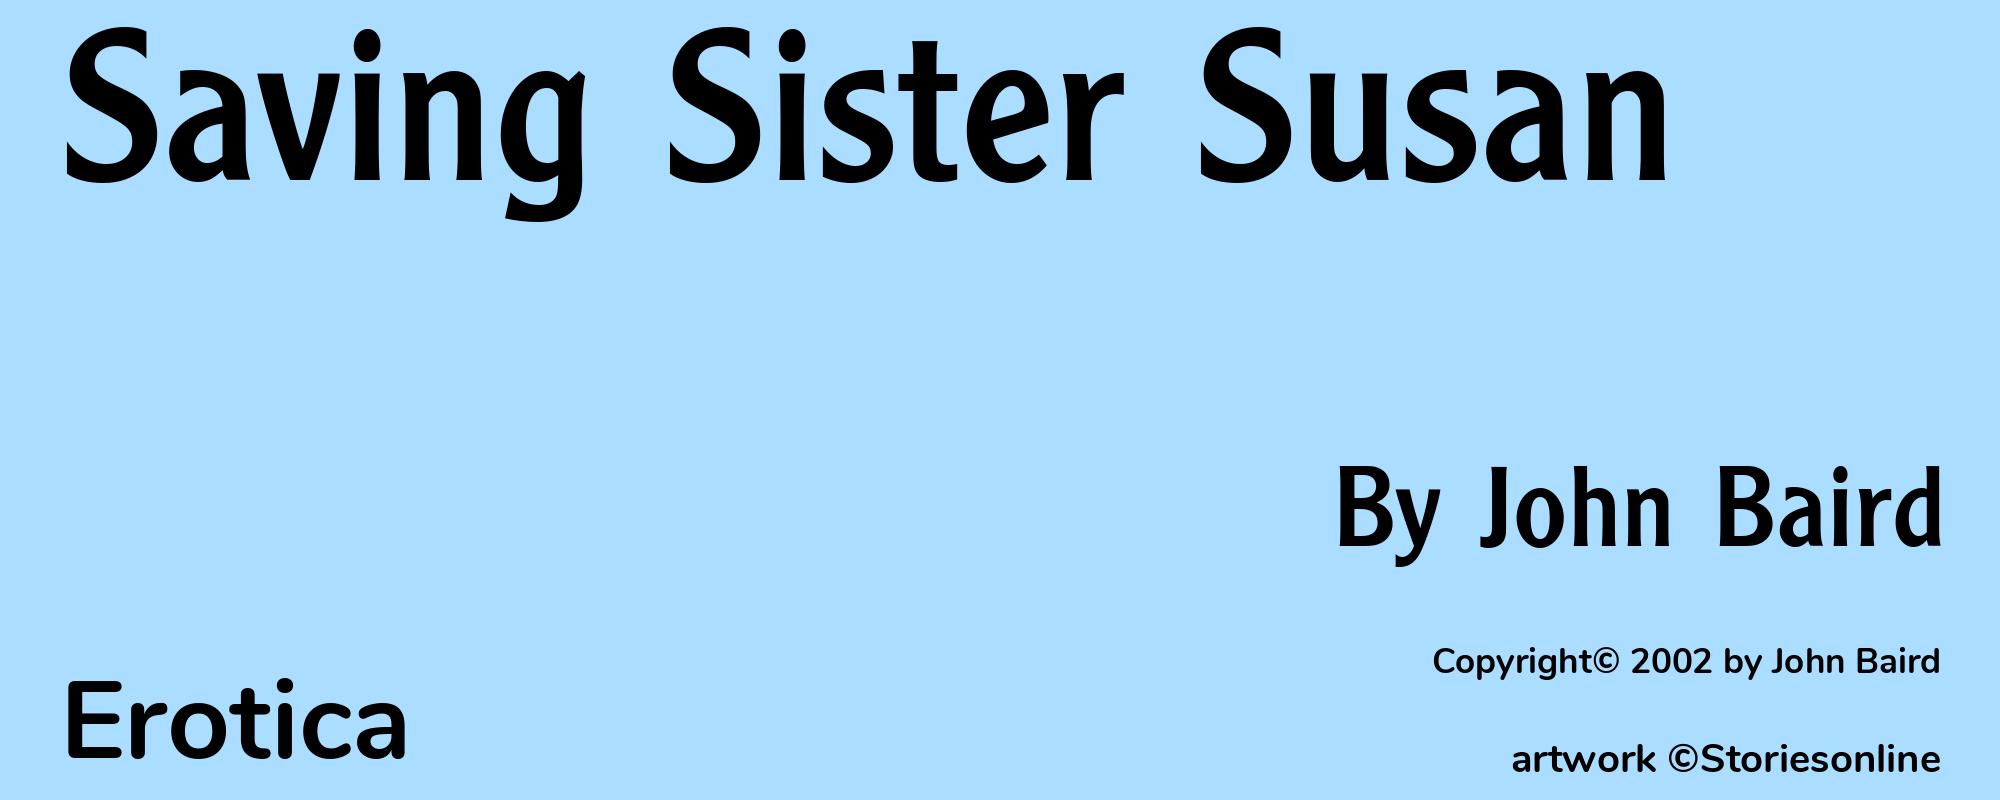 Saving Sister Susan - Cover